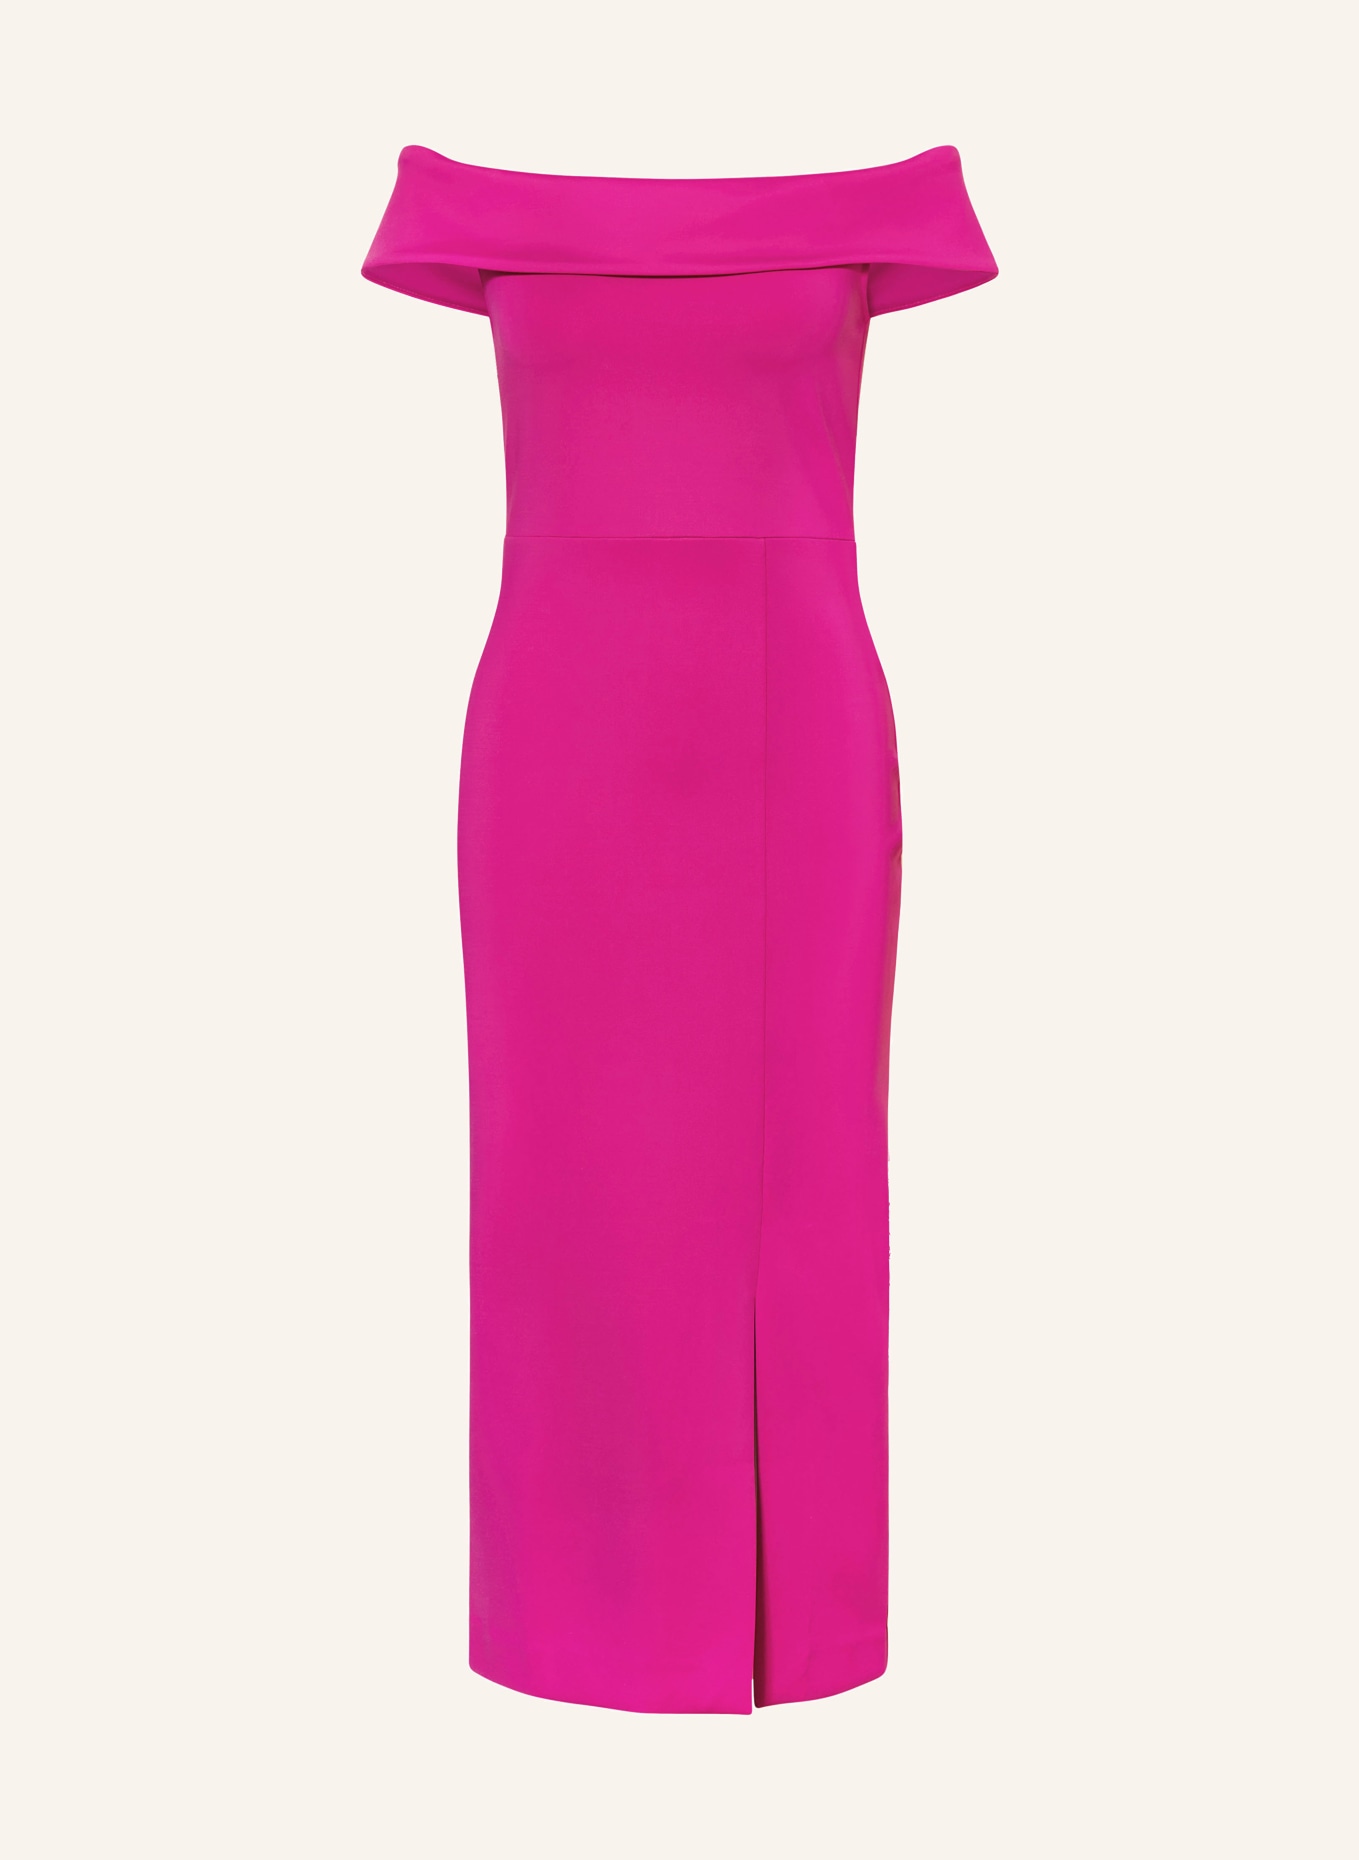 TED BAKER Kleid BARDOT, Farbe: PINK (Bild 1)